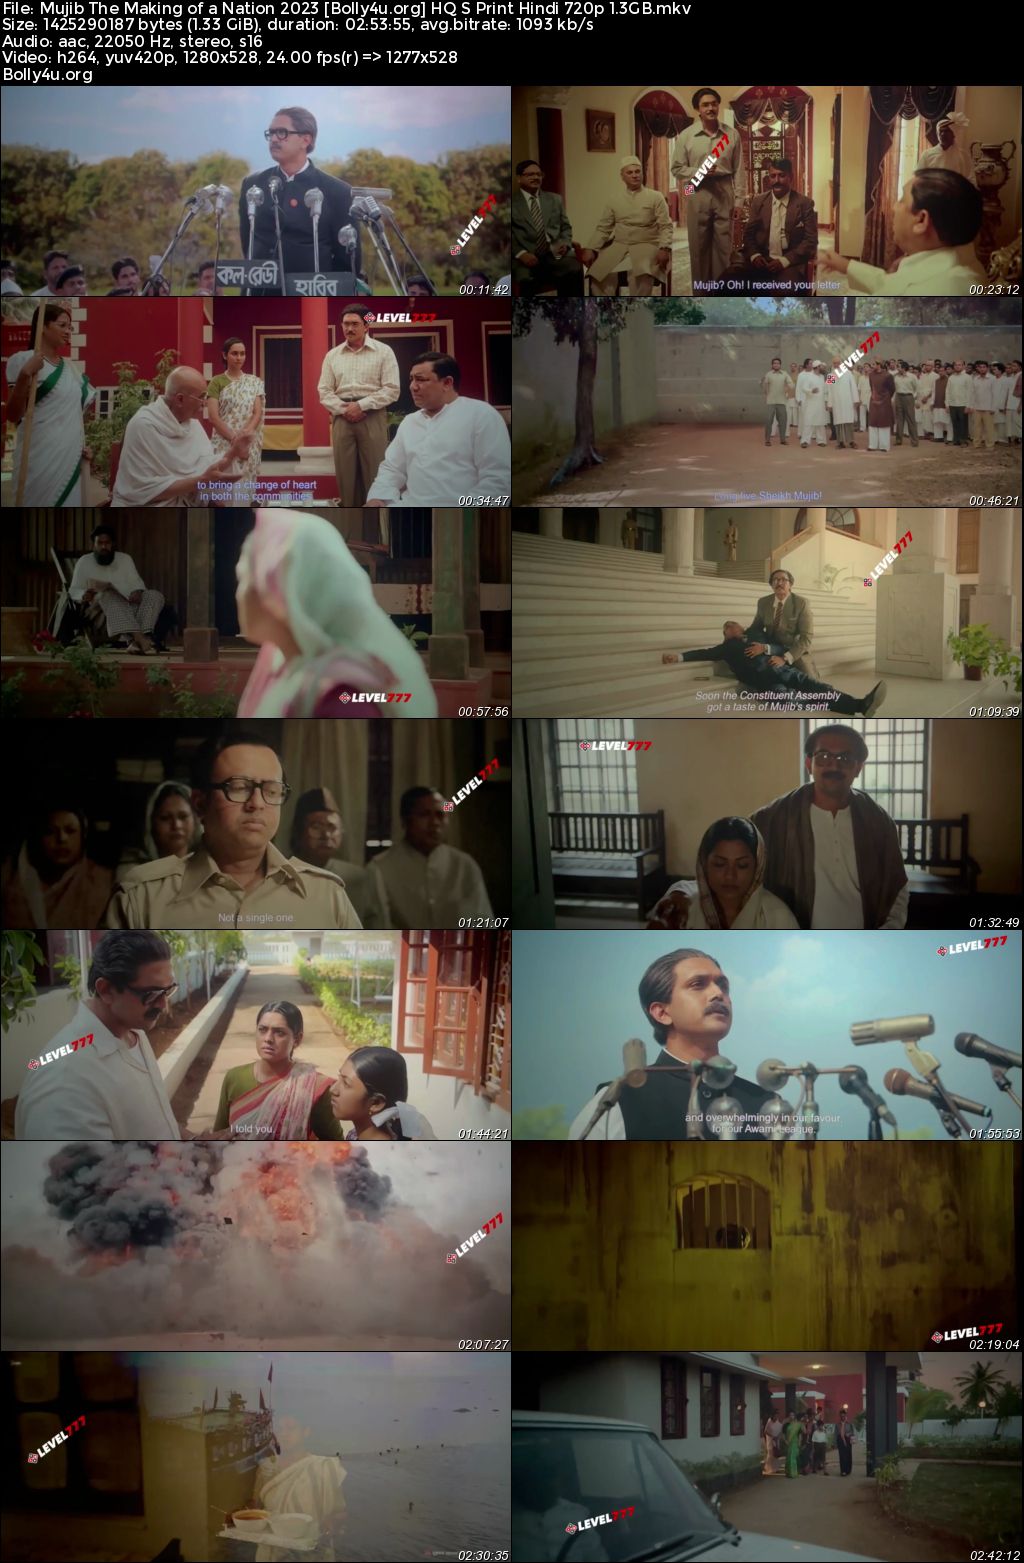 Mujib The Making of a Nation 2023 HQ S Print Hindi Full Movie Download 1080p 720p 480p